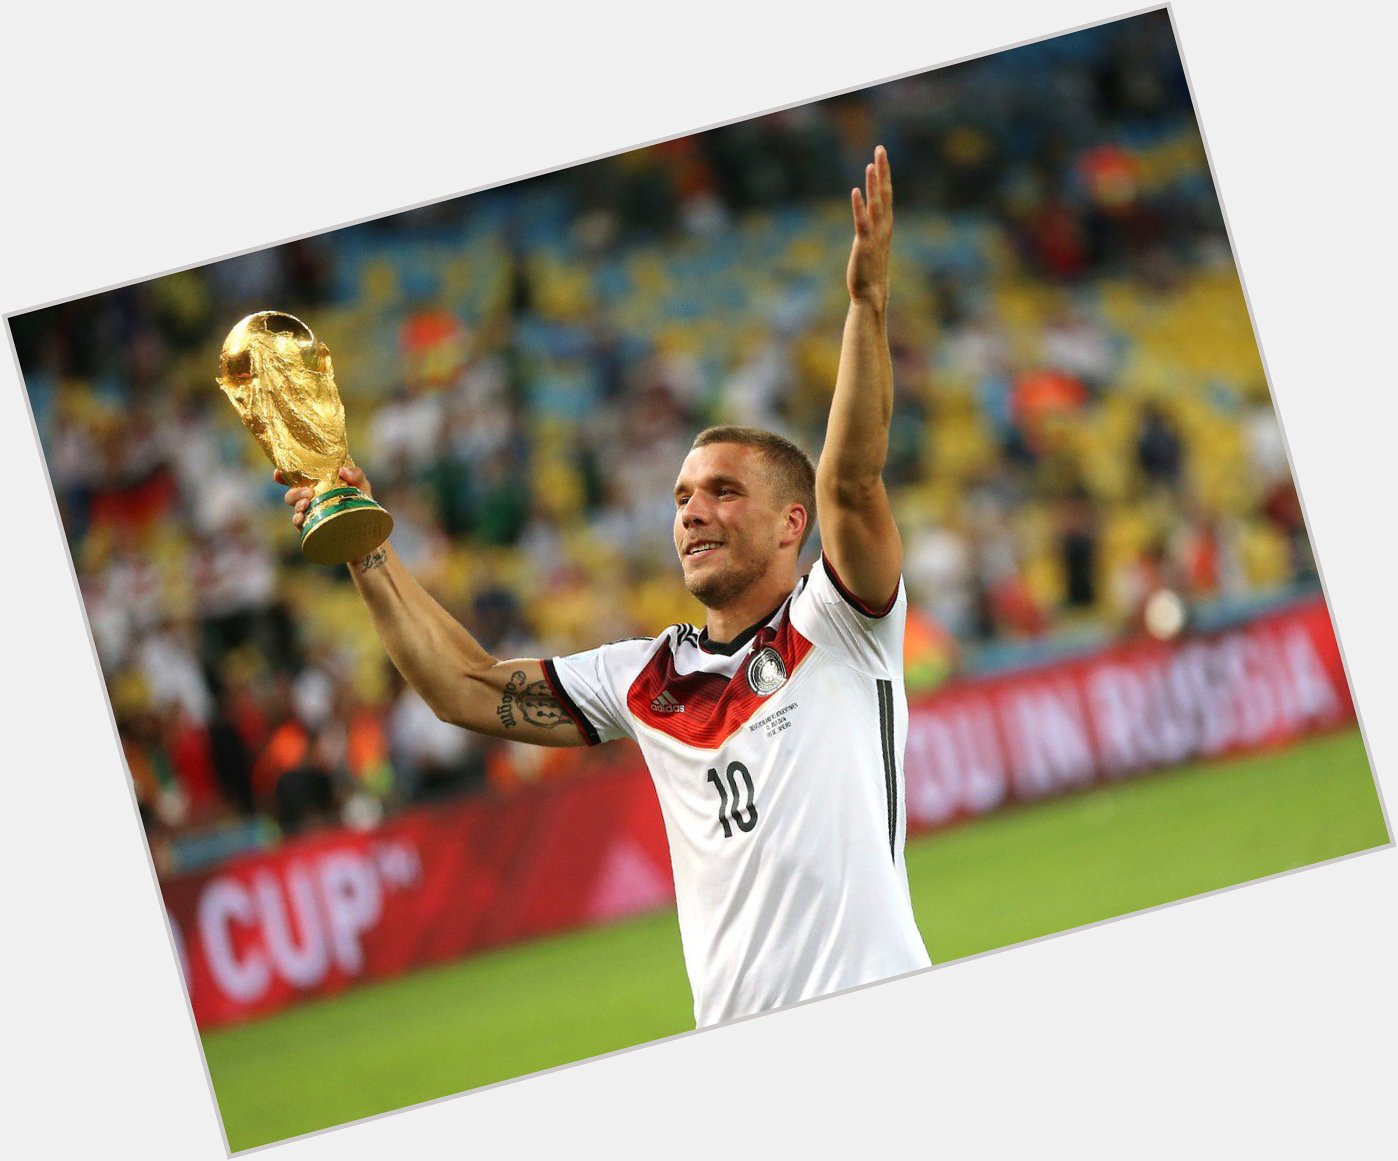 4th June 1985 a star  was born. 

Happy Birthday Lukas Podolski - 2014 Word Cup Winner. 